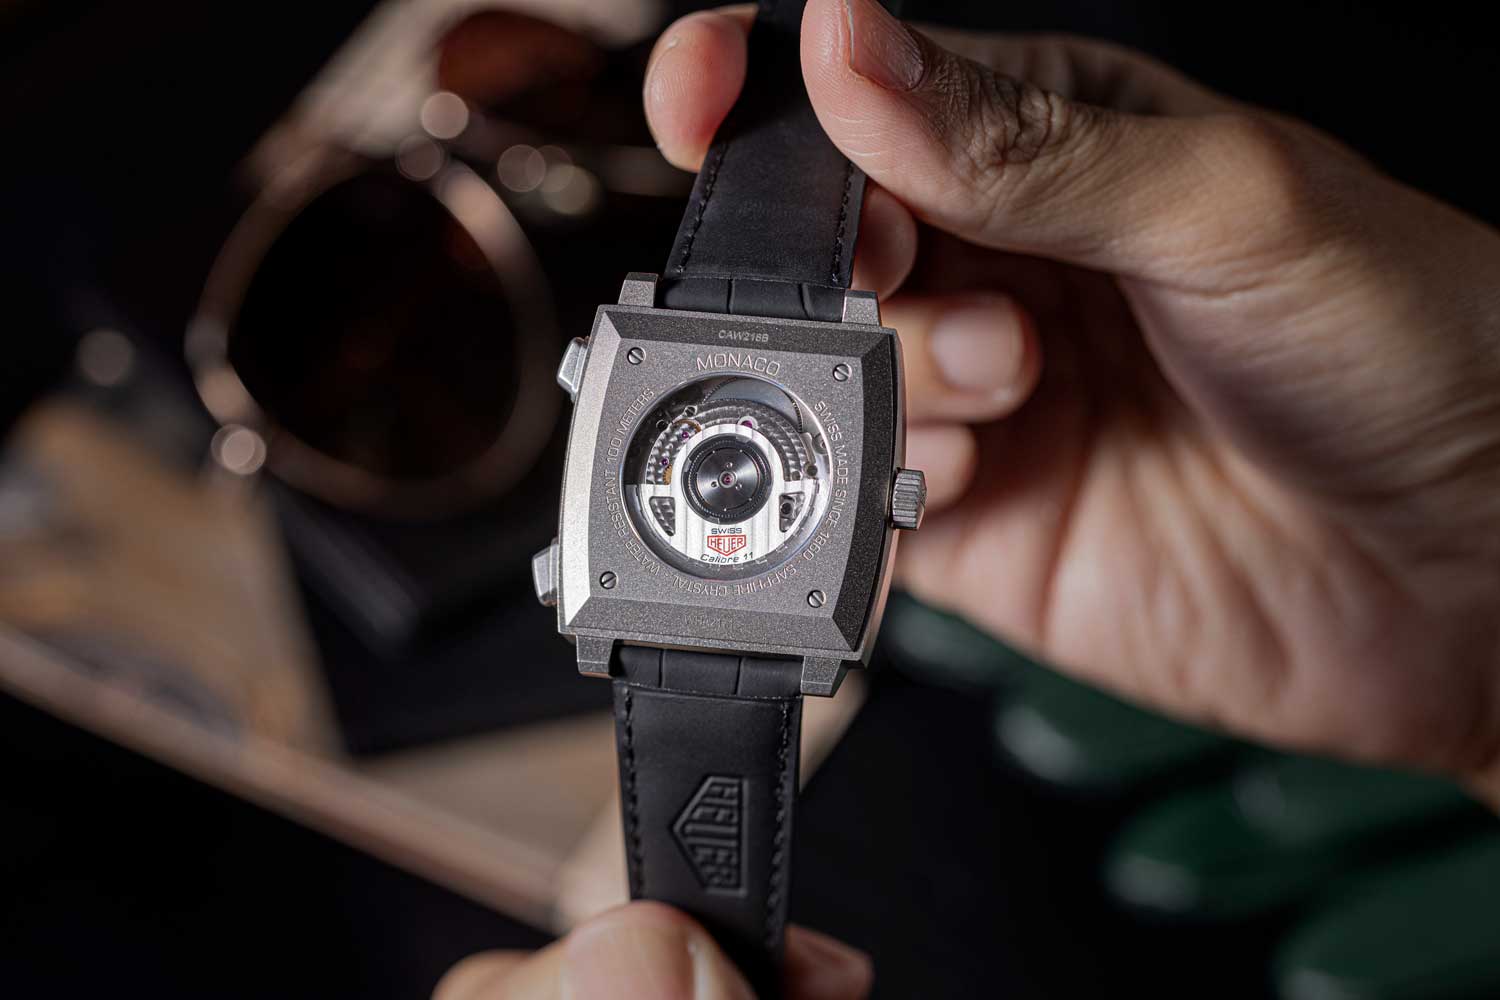  TAG Heuer Monaco Titan Special Edition chiếc đồng hồ cổ điển thế kỷ 21